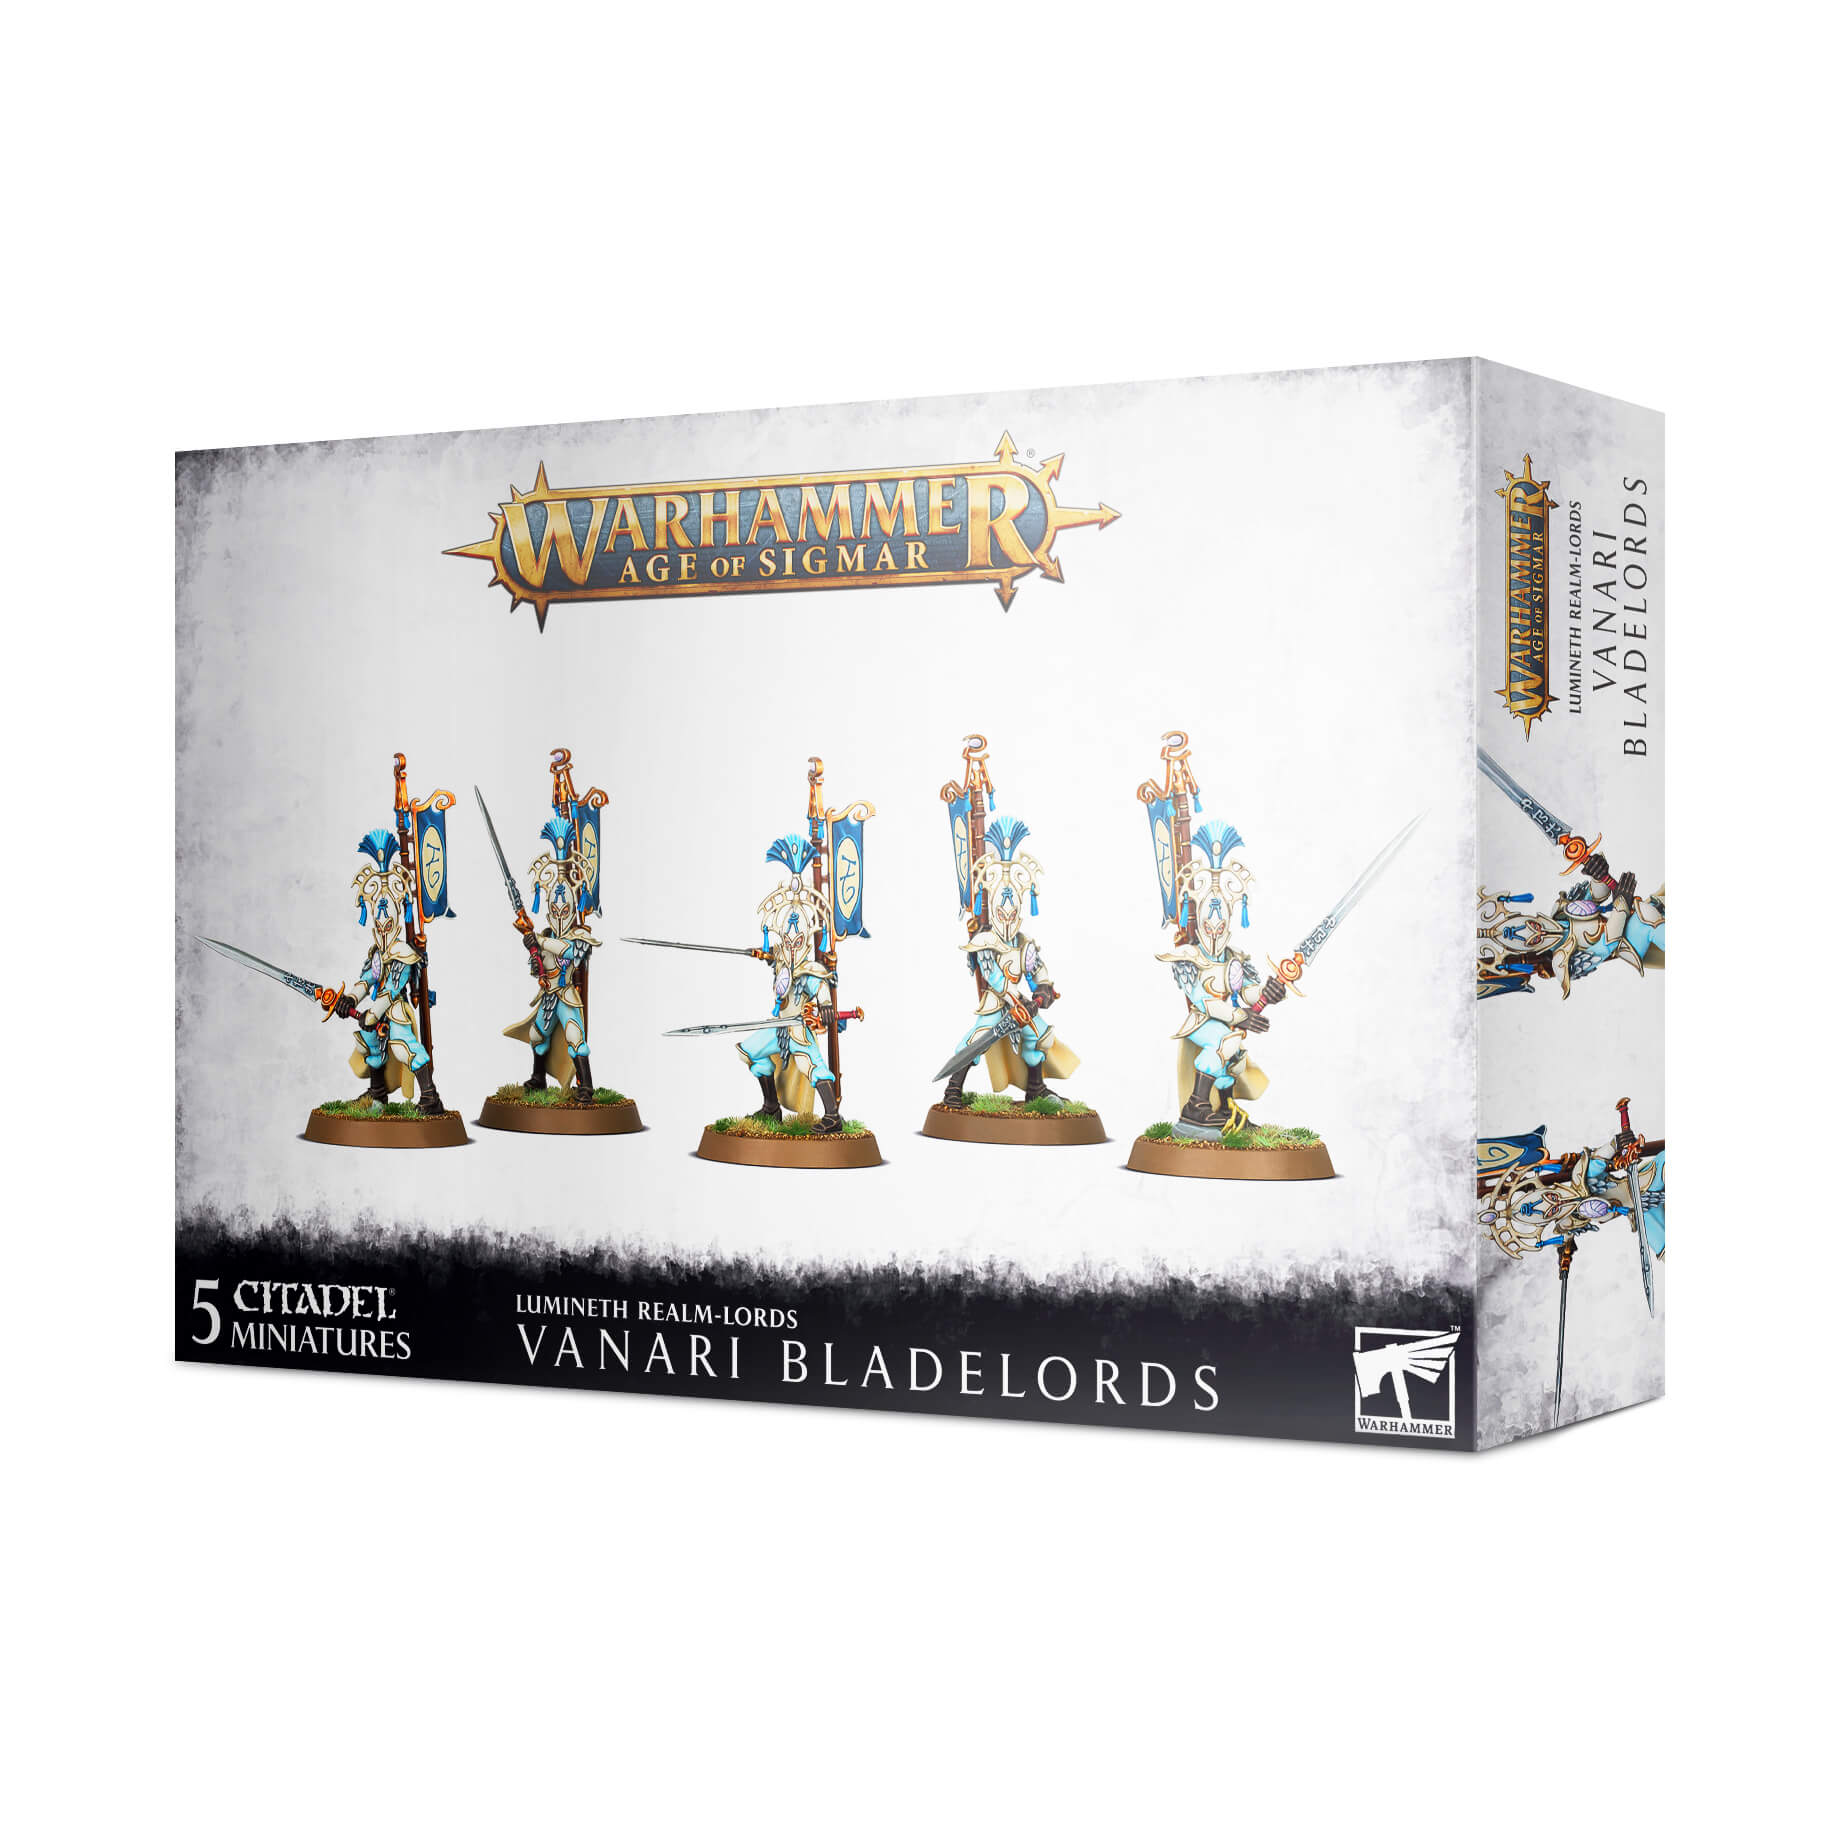 Warhammer Age of Sigmar Lumineth Realm-Lords Vanari Bladelords Miniatures